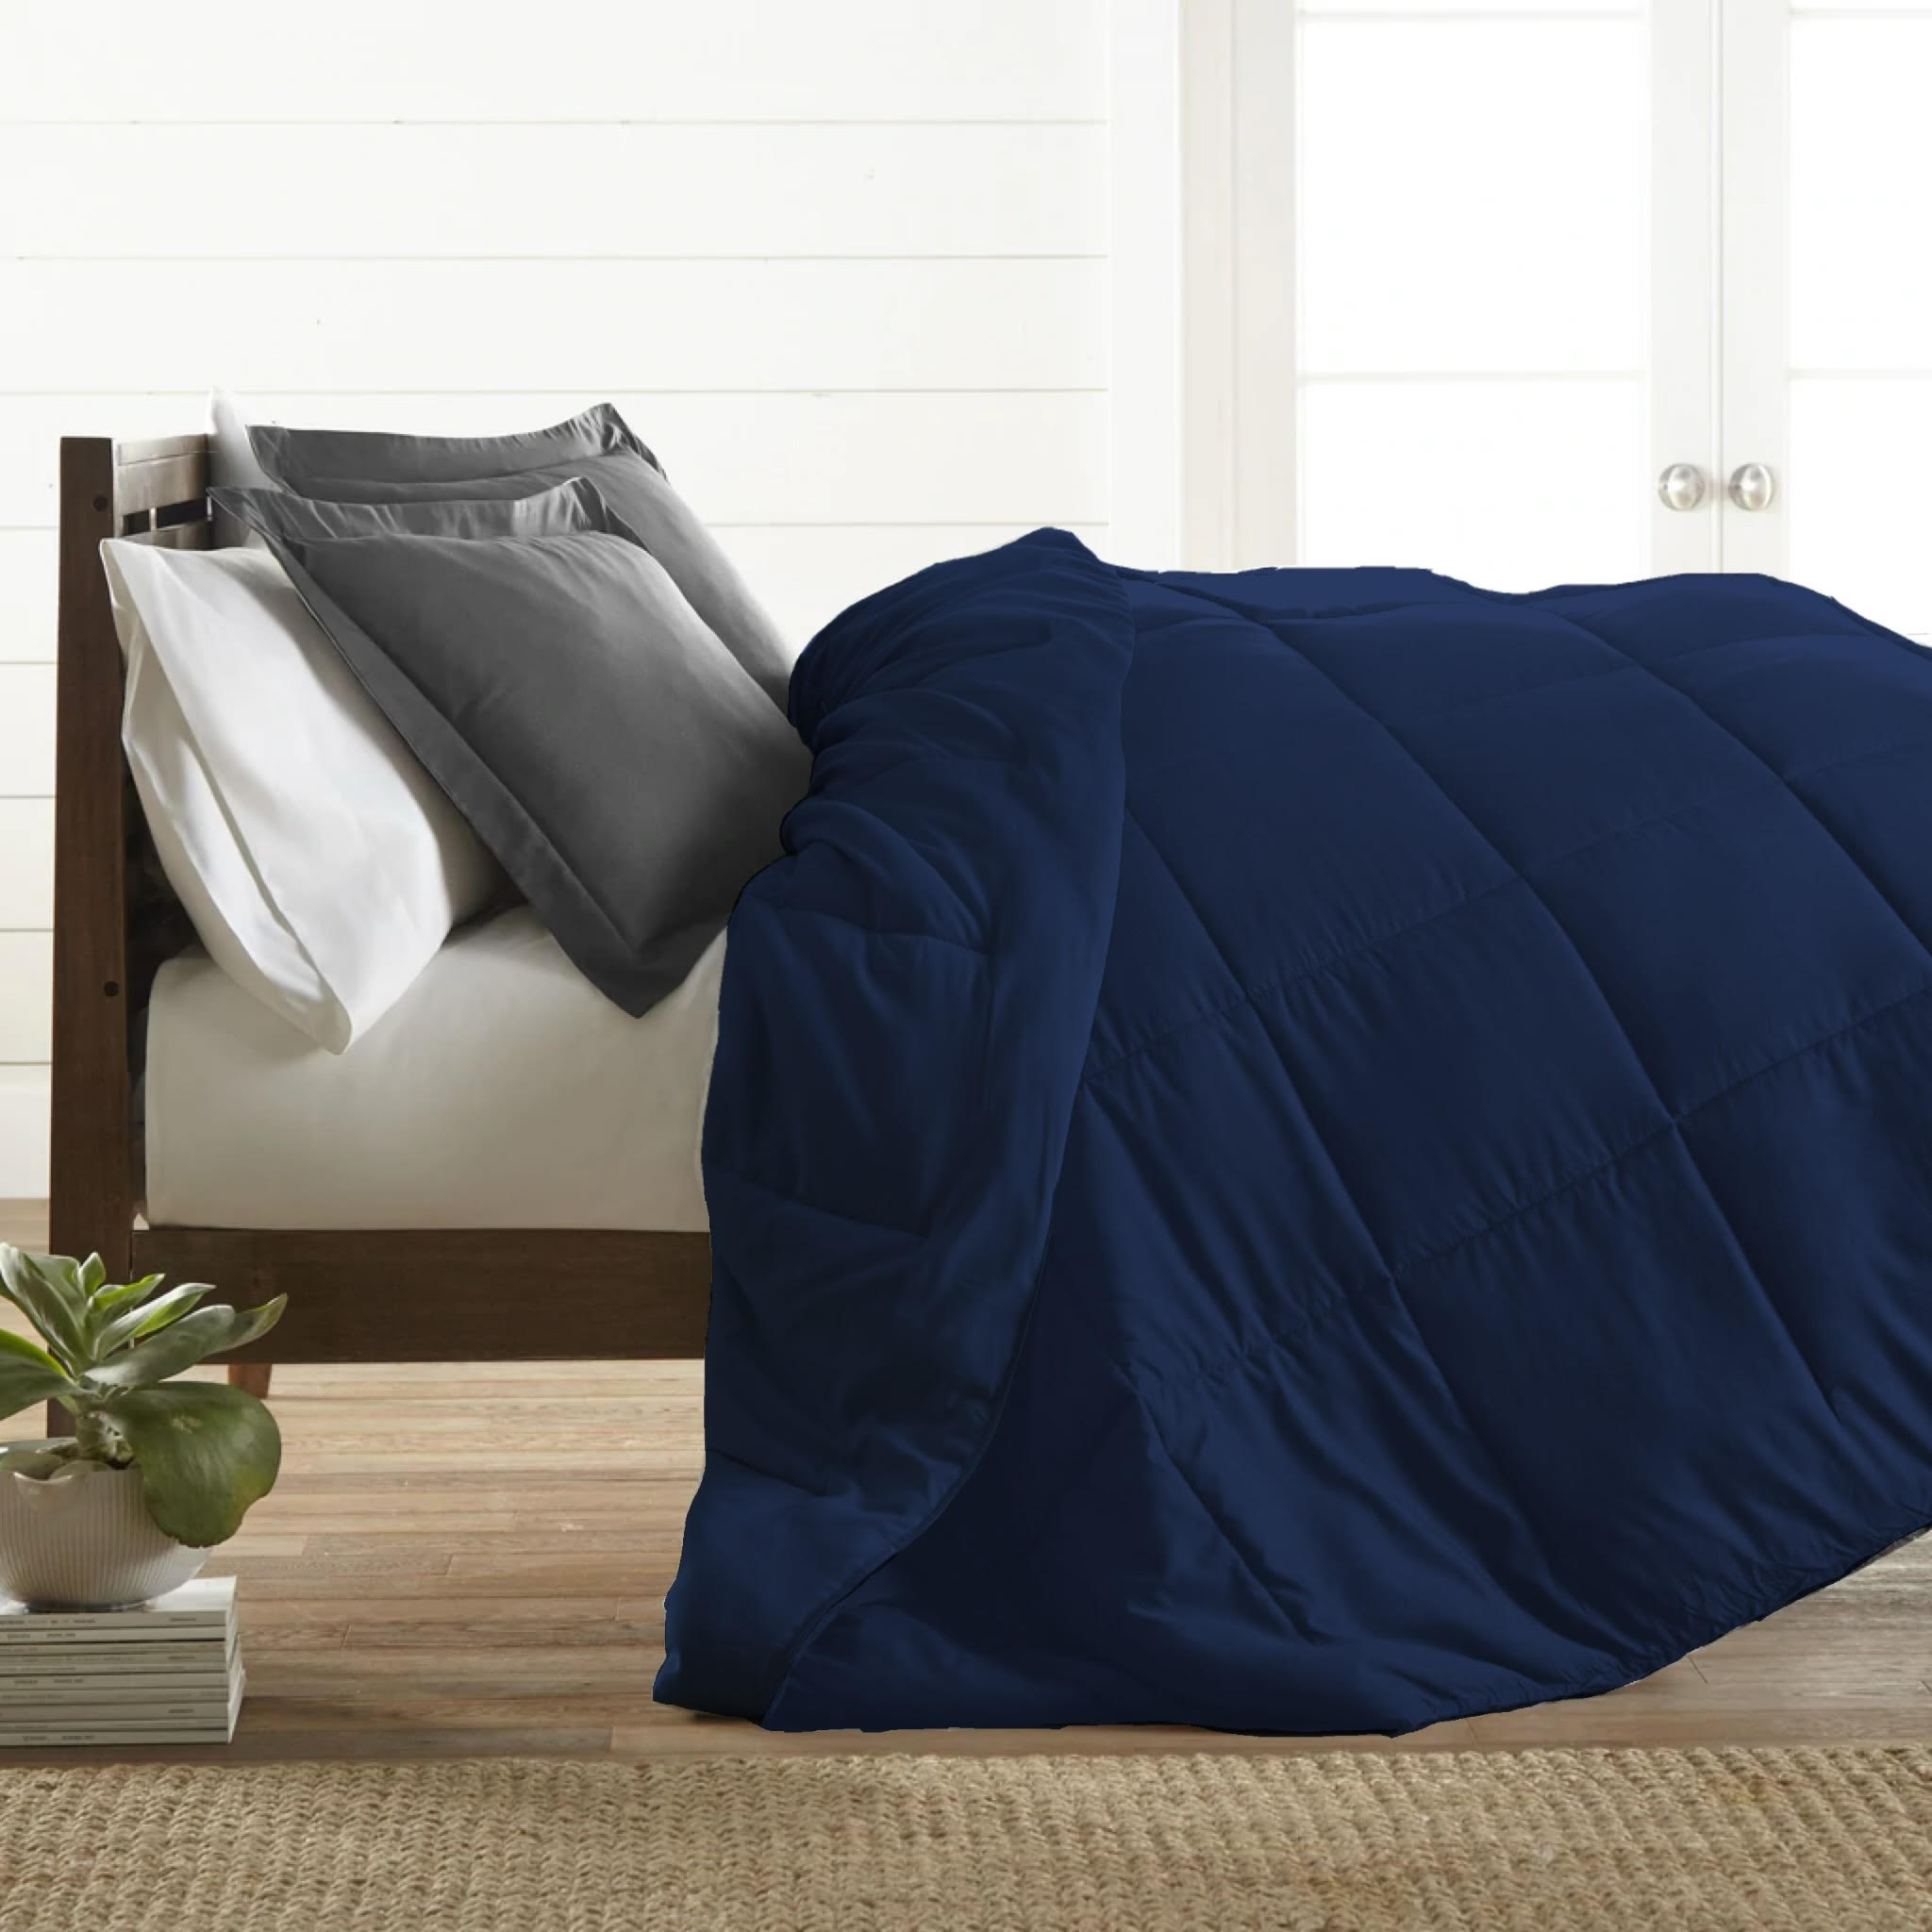 Bamboo Elegance Reversible Comforter - Premium Down Alternative Filling, Blended Cover, Soft, Quilted, Duvet Insert, Season, Warm and Fluffy - Navy,